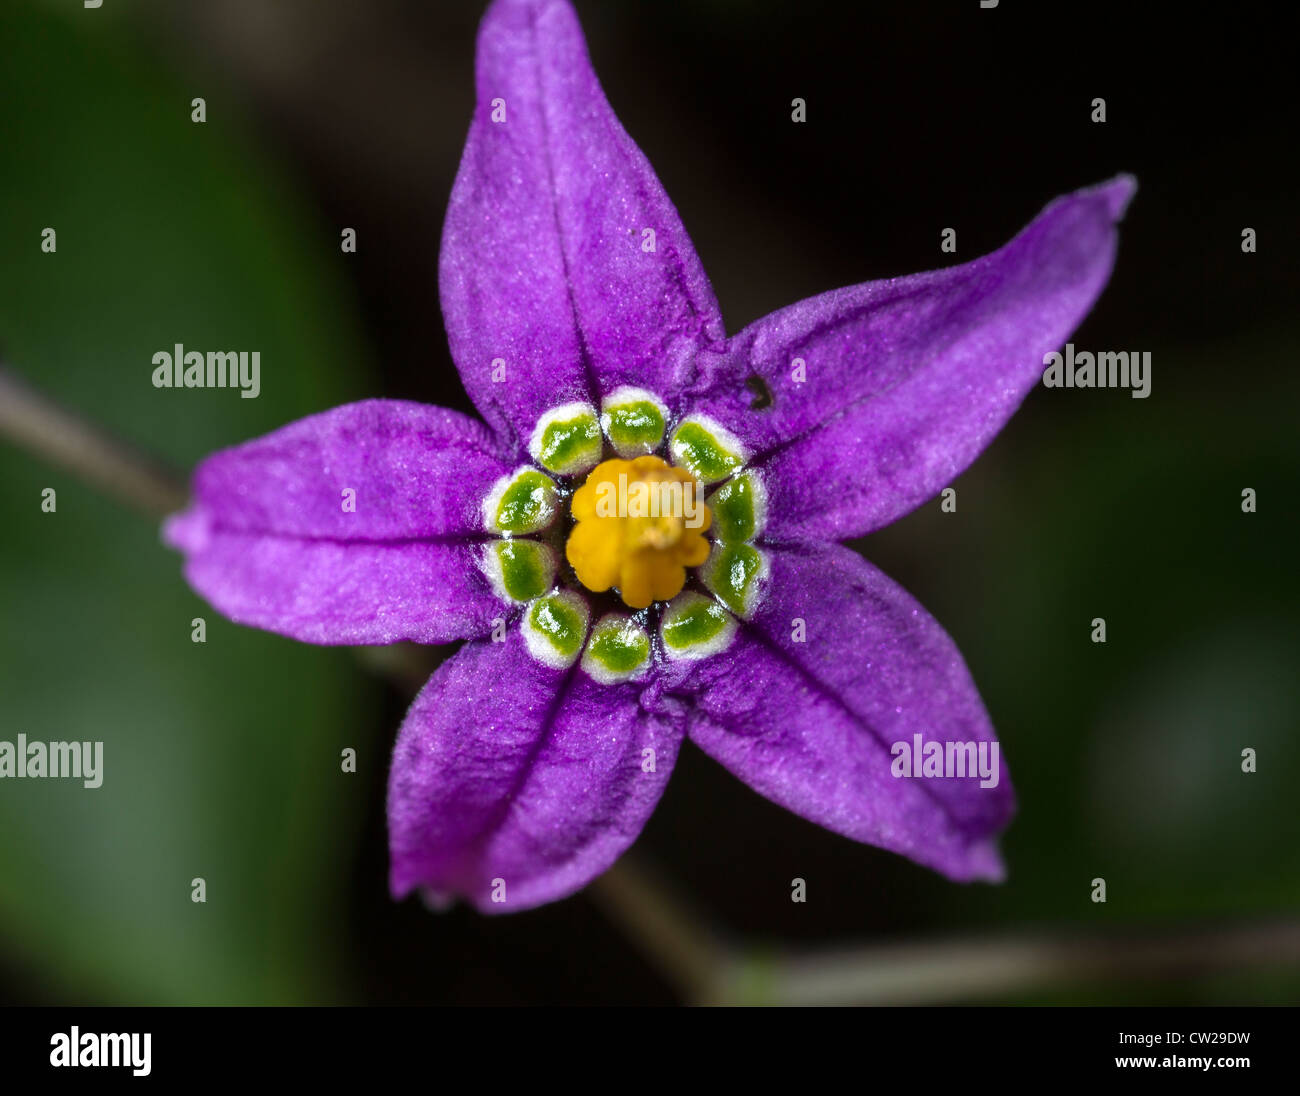 Flower Of Woody Nightshade Solanum Dulcamara Stock Photo Alamy